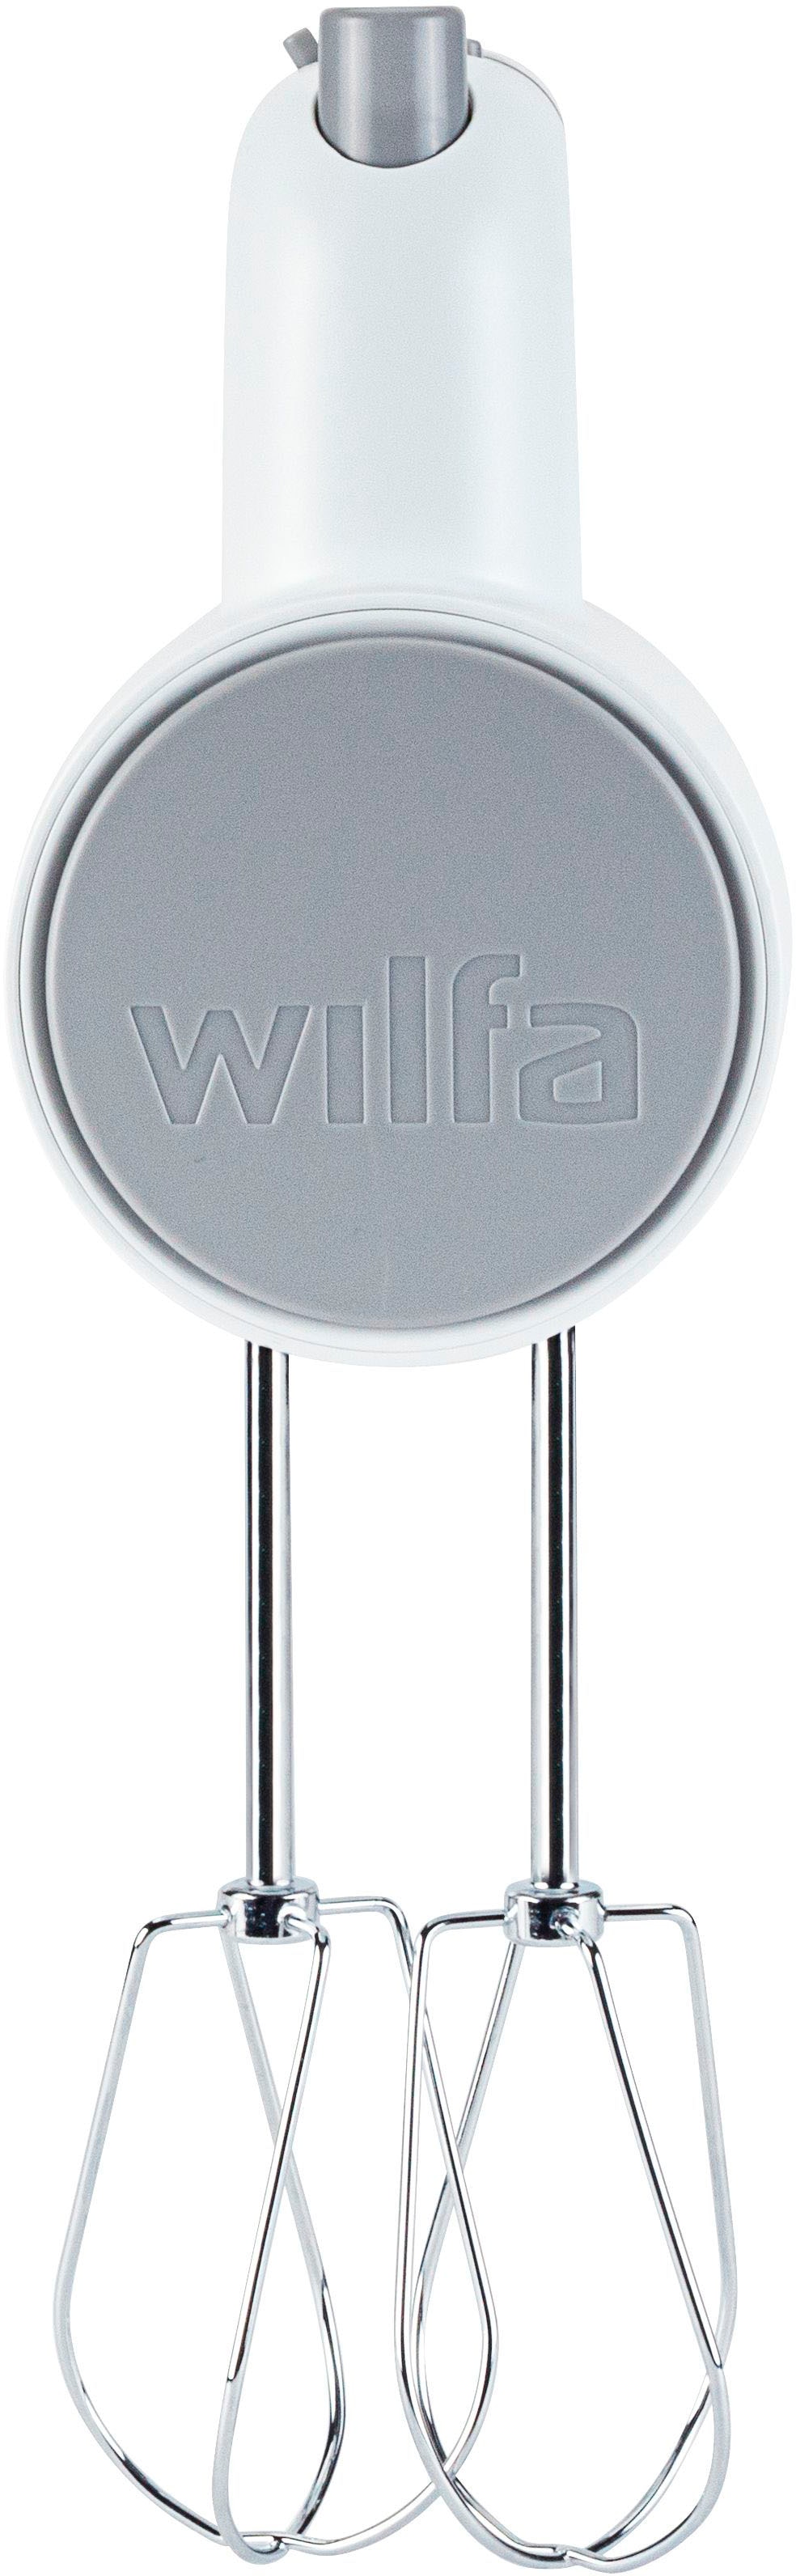 wilfa Handmixer »EASY HM2W-350, 602711, weiß/grau«, 350 W